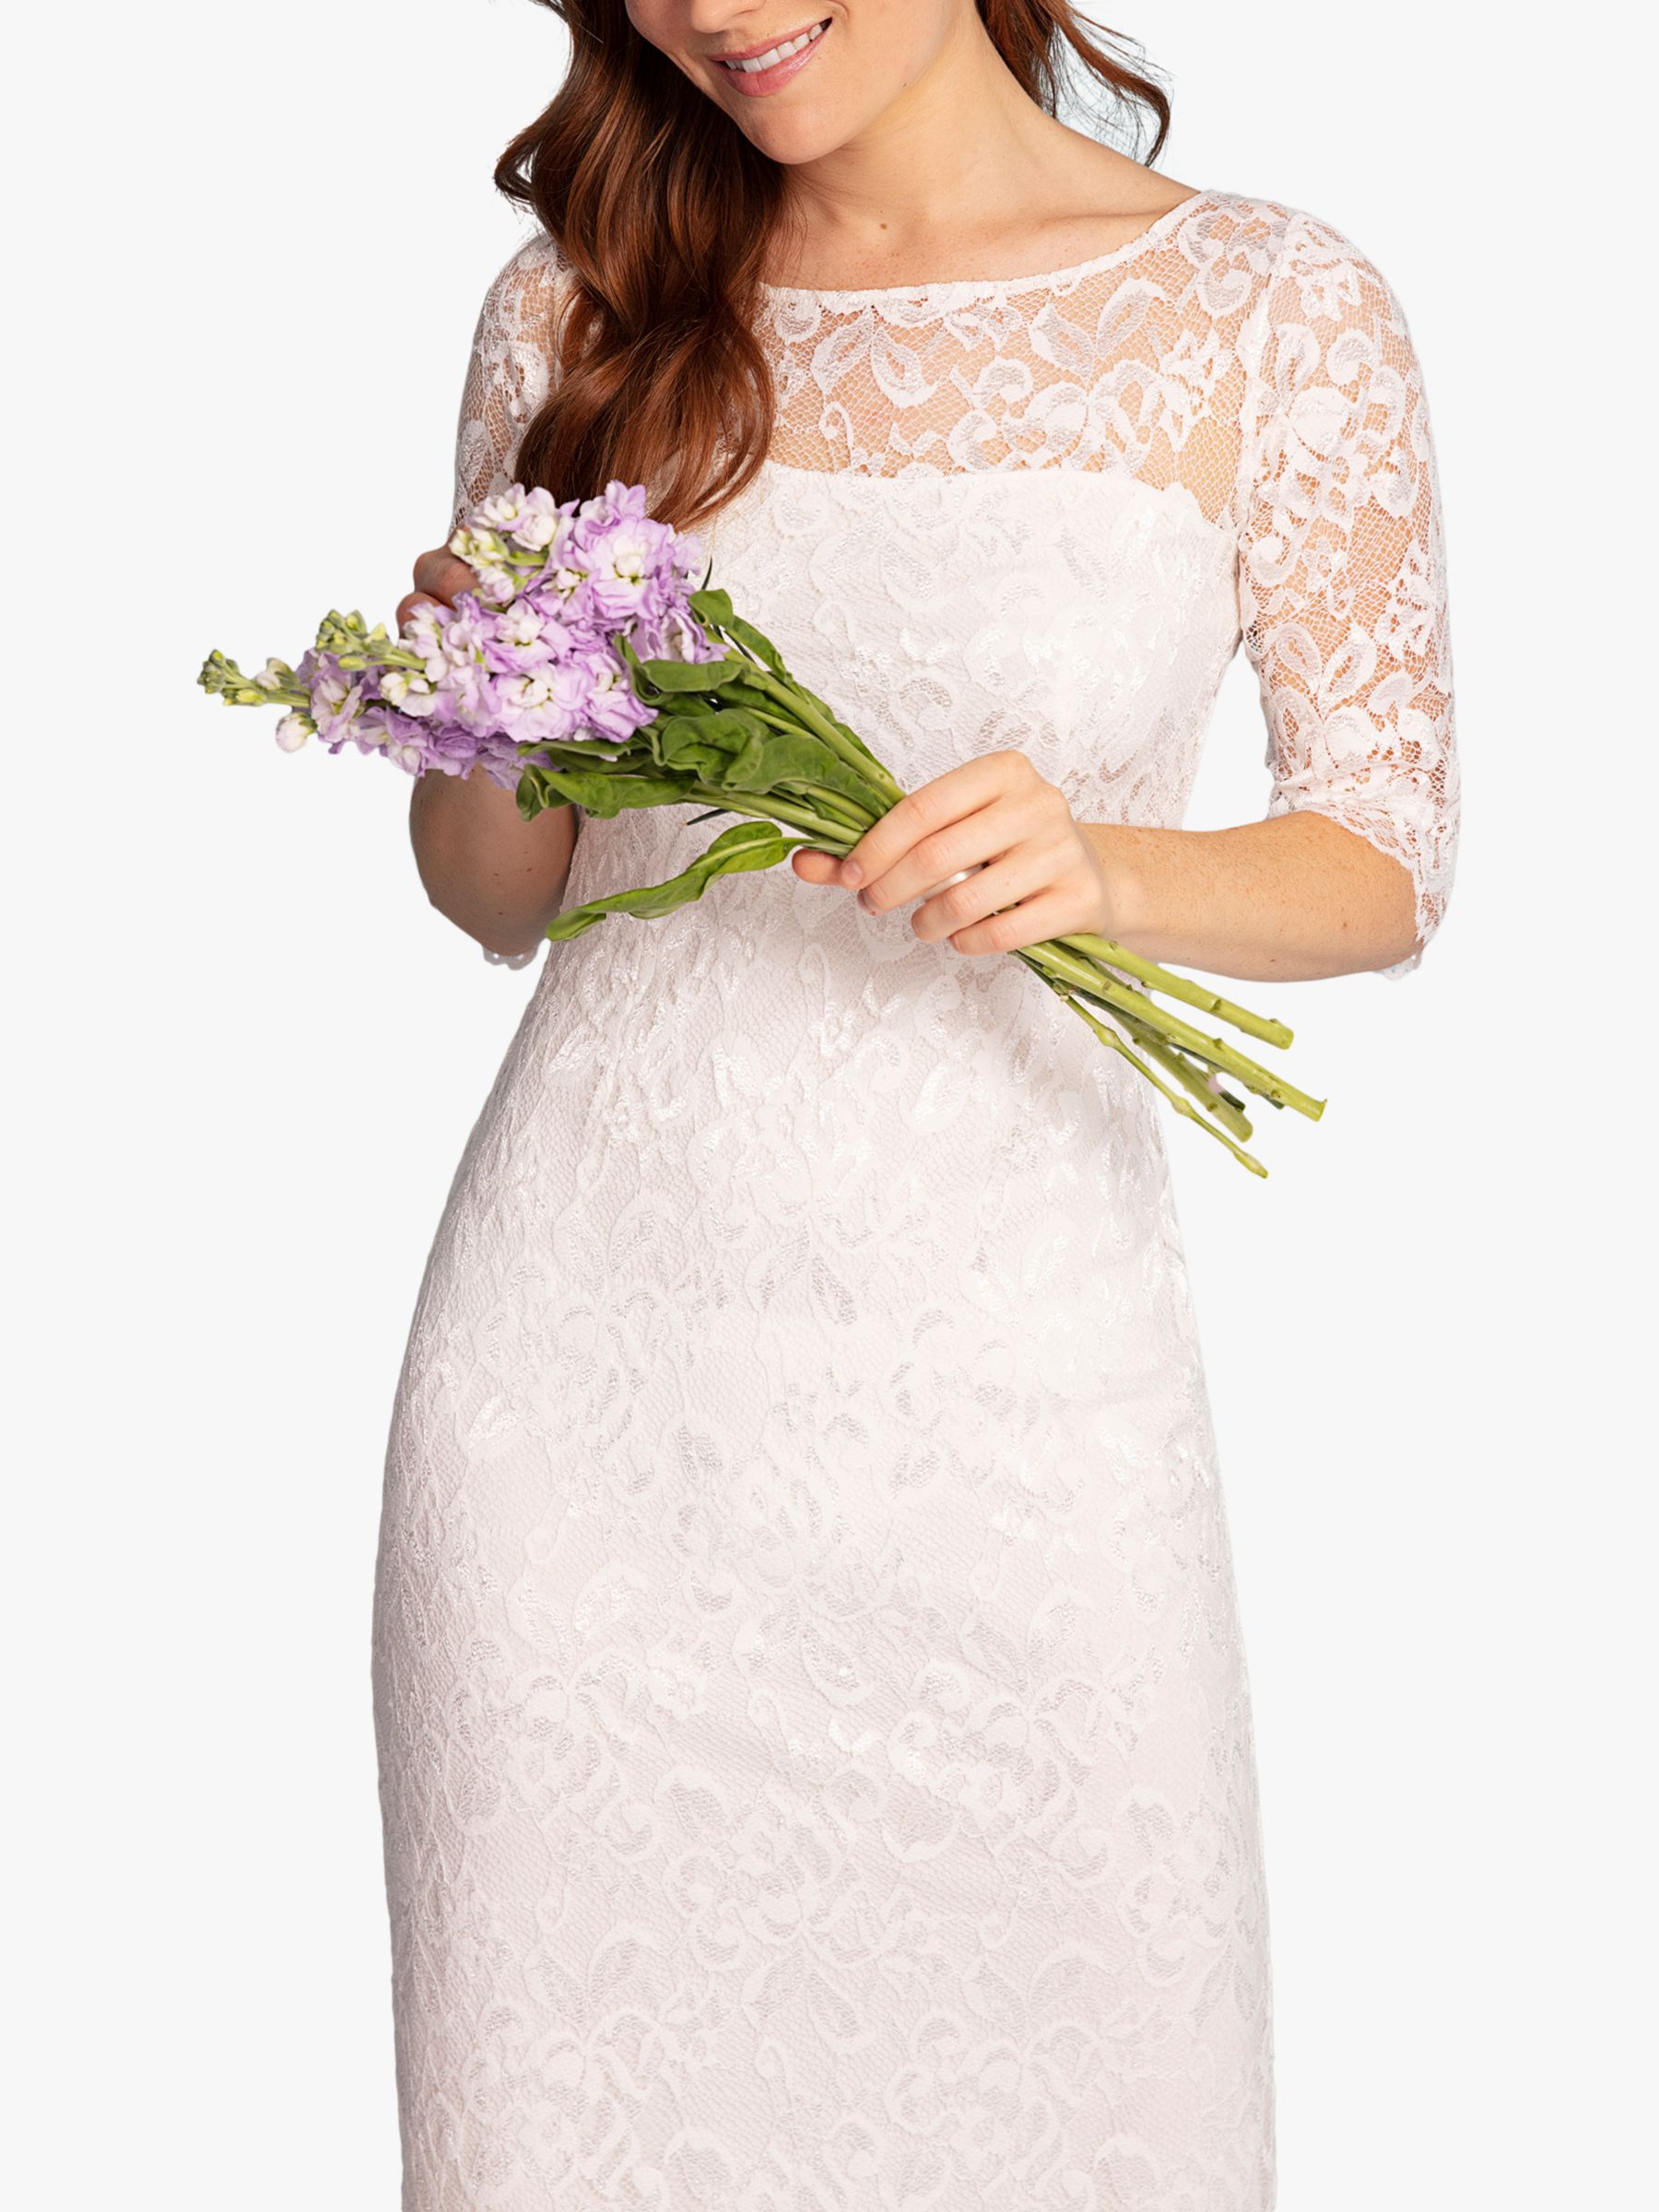 Alie Street Lila Lace Wedding Dress, Ivory, 6-8